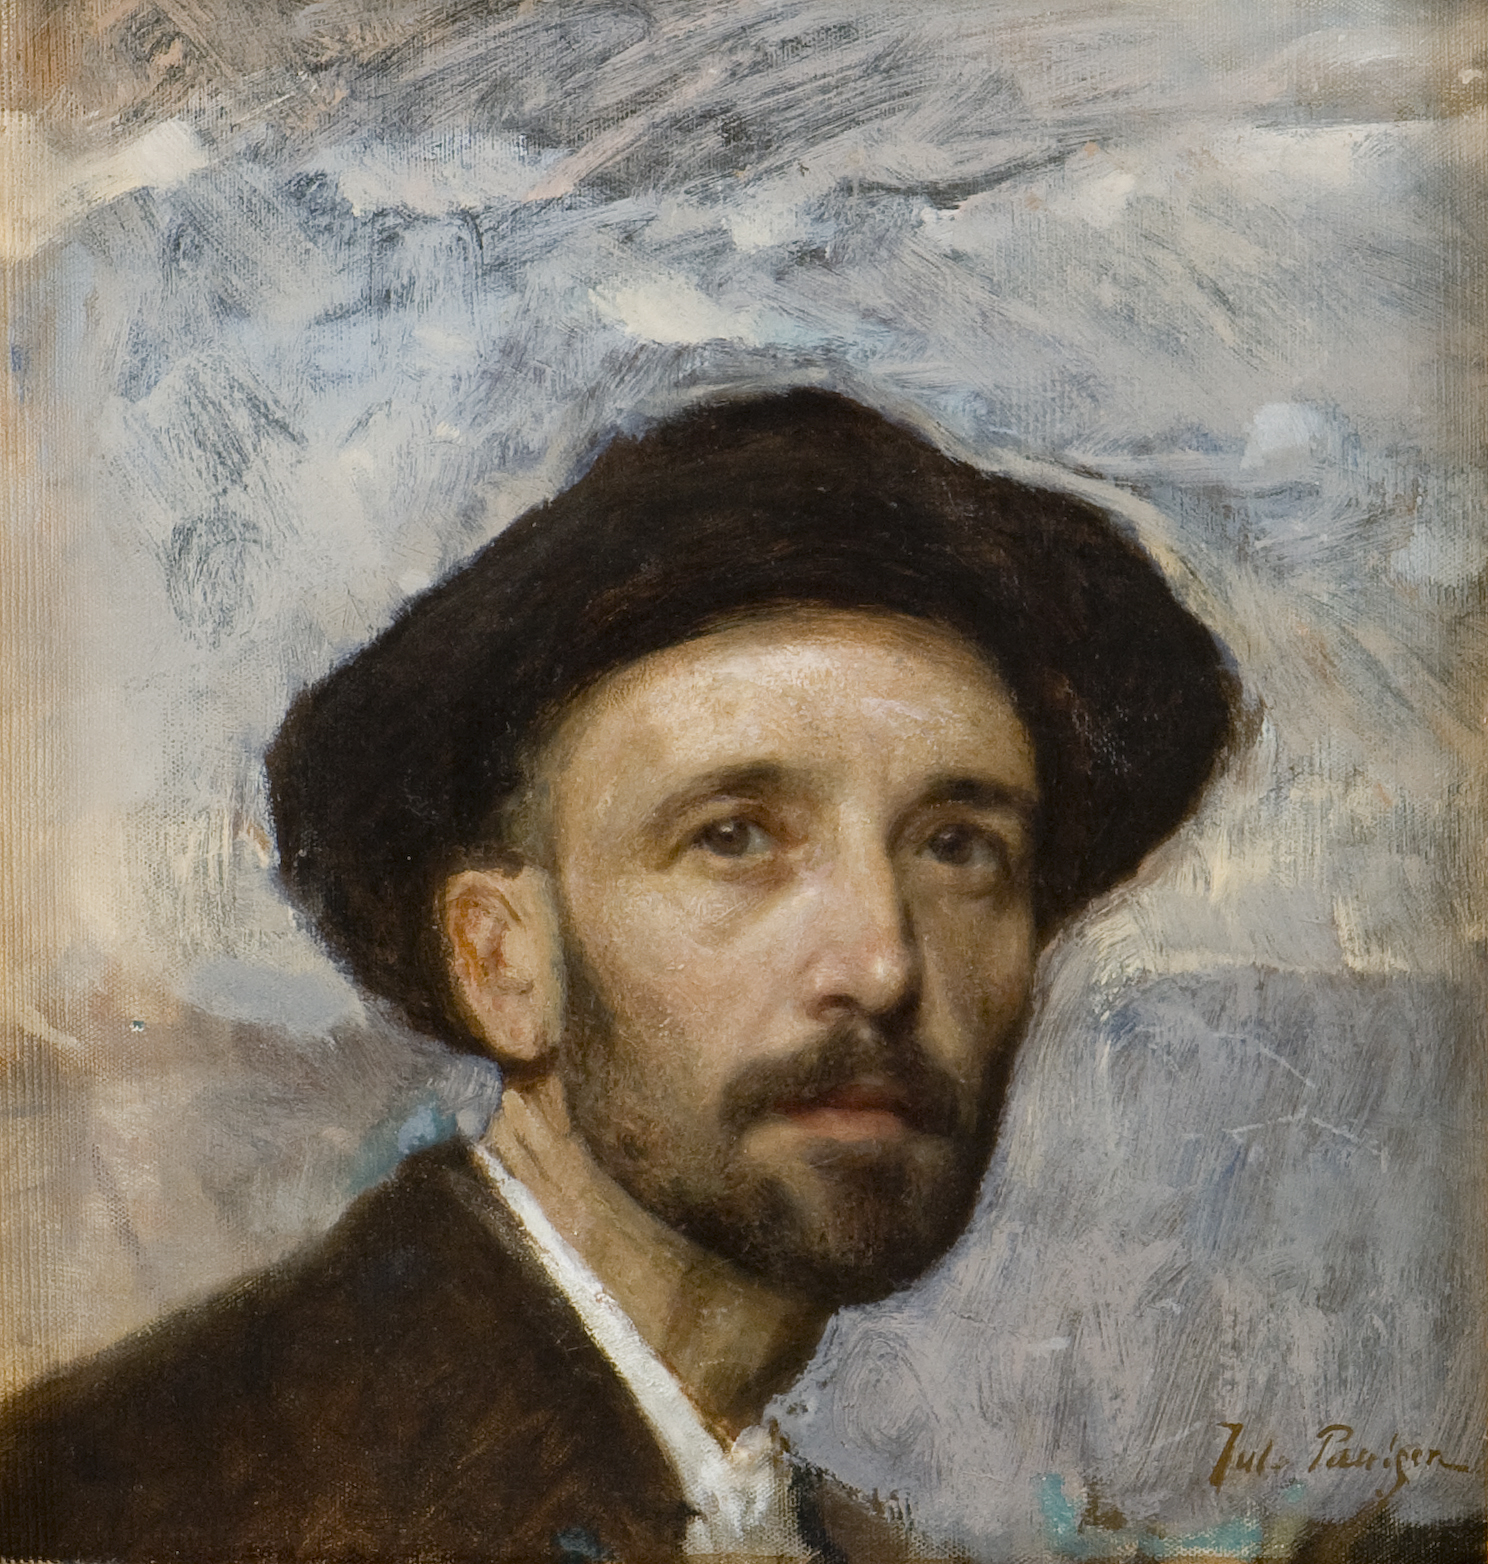 museumselfie day: Seven artists' self-portraits | Europeana Blog